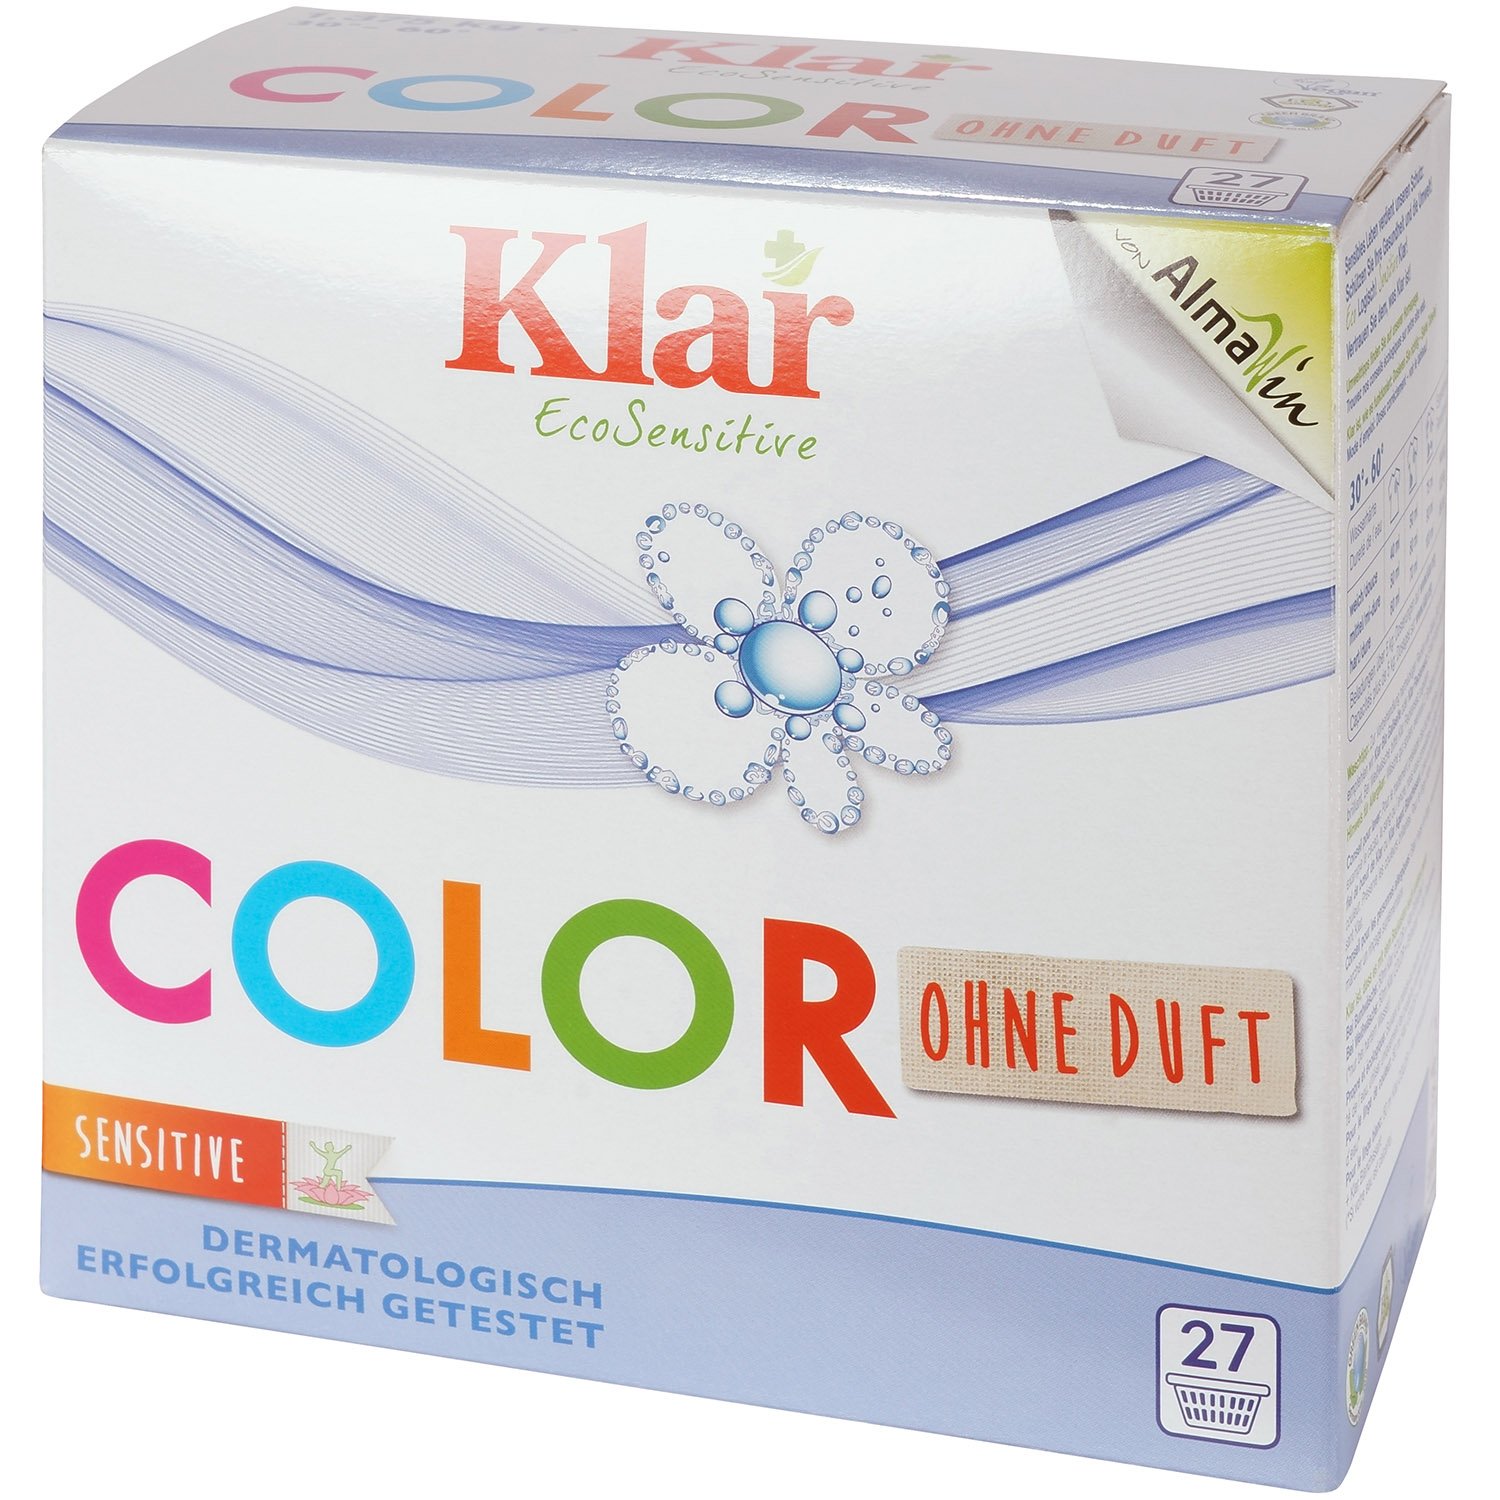 Пральний порошок Klar EcoSensitive Color органічний, для кольорових тканин, 1,375 кг - фото 1